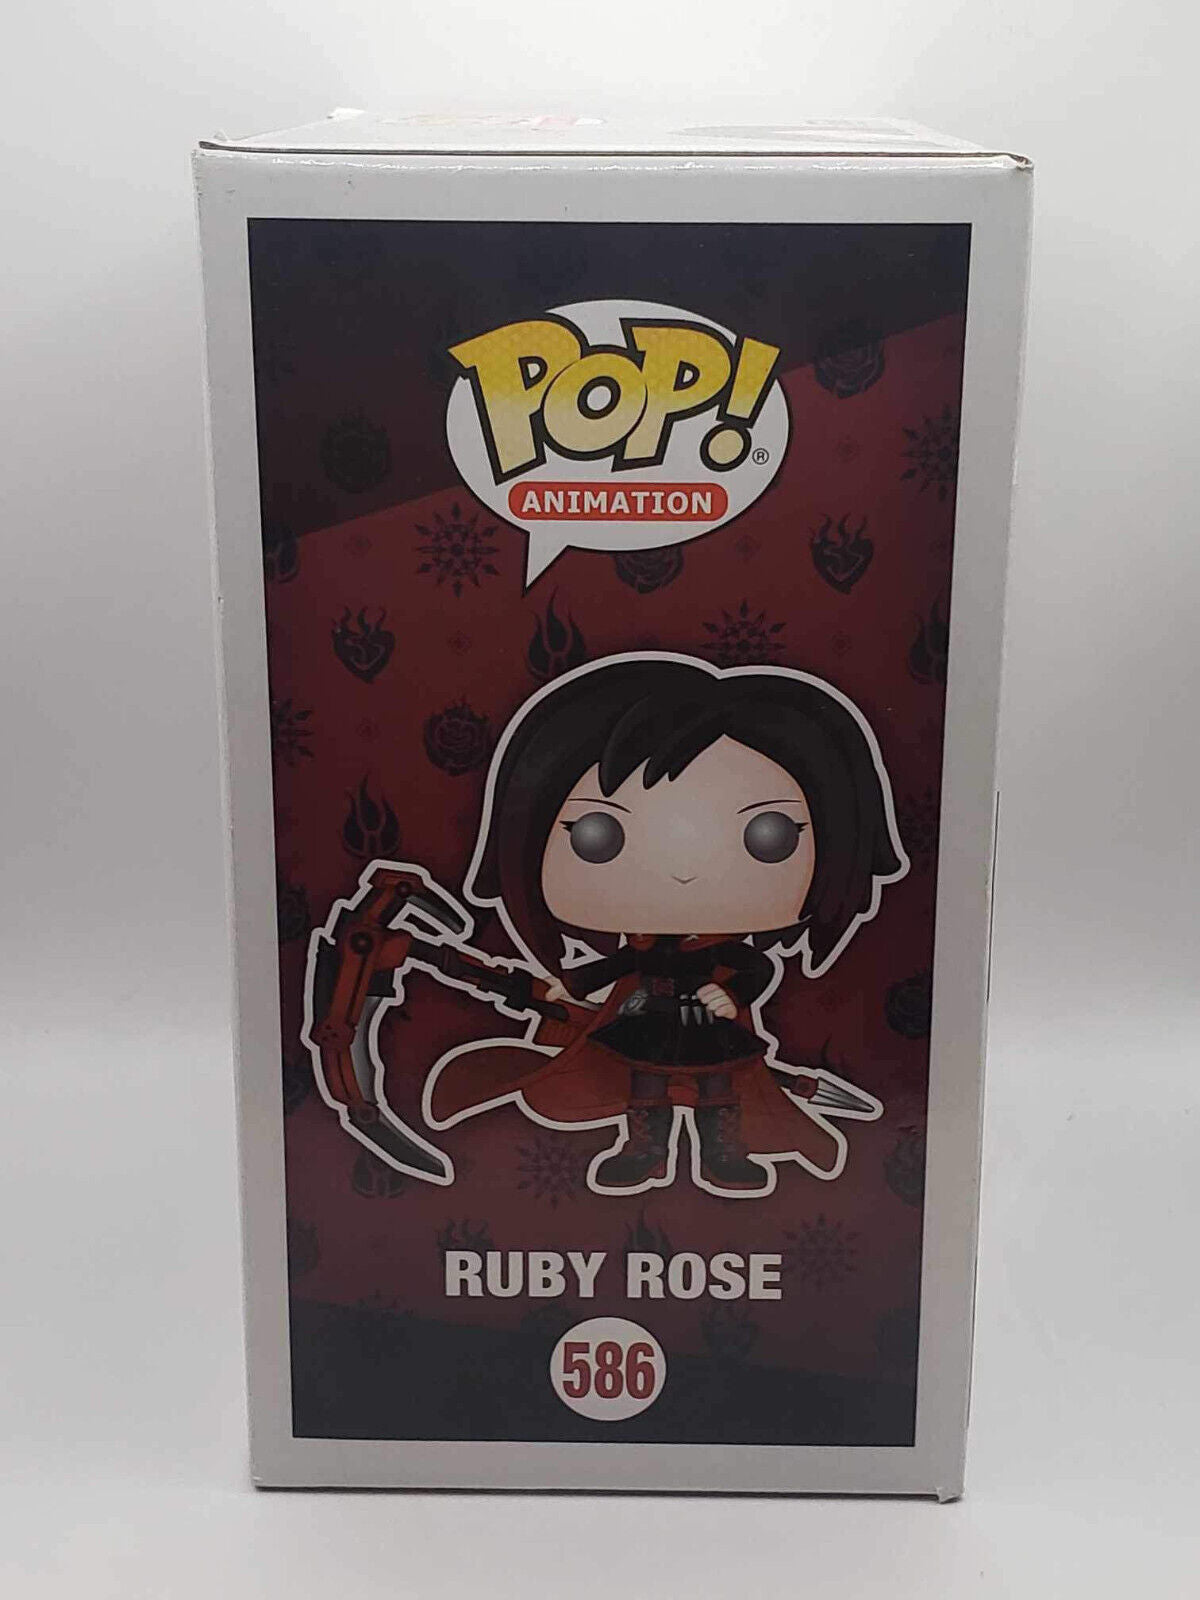 RWBY Ruby Rose #586 Funko Pop! Animation Vinyl Figure